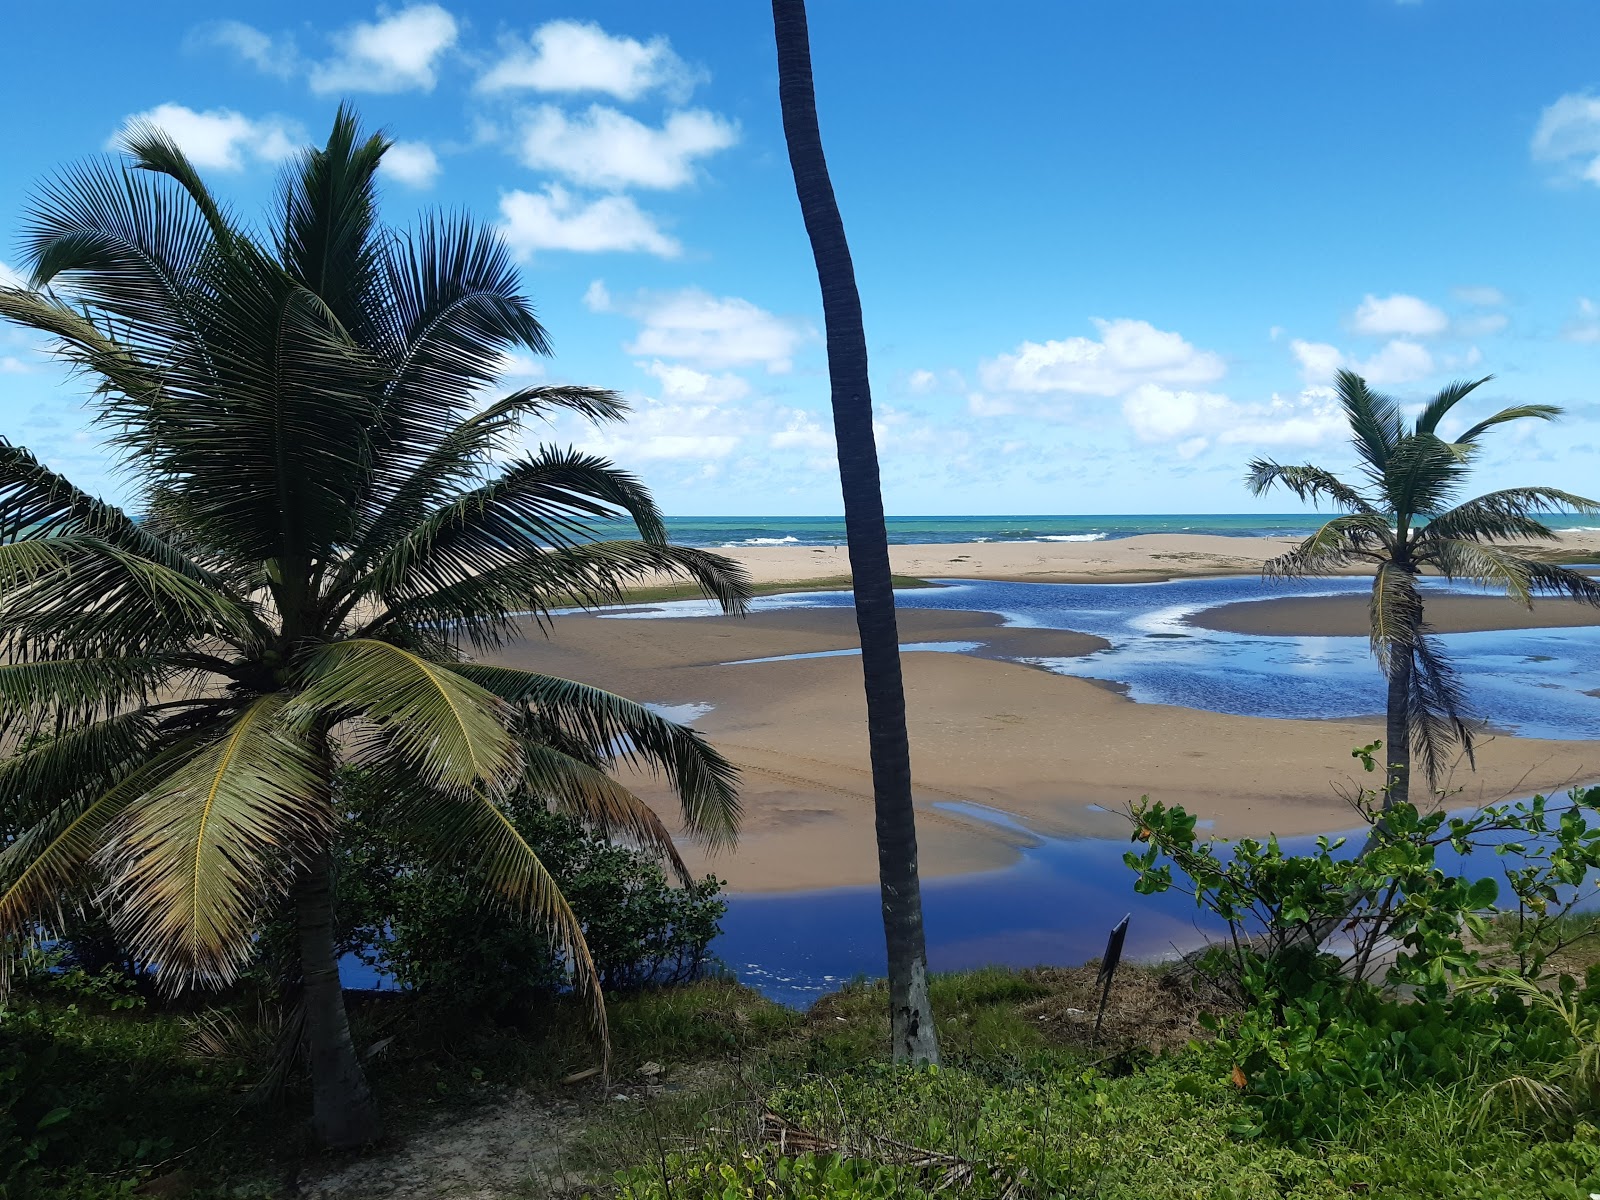 Photo of Imbassai Beach - popular place among relax connoisseurs